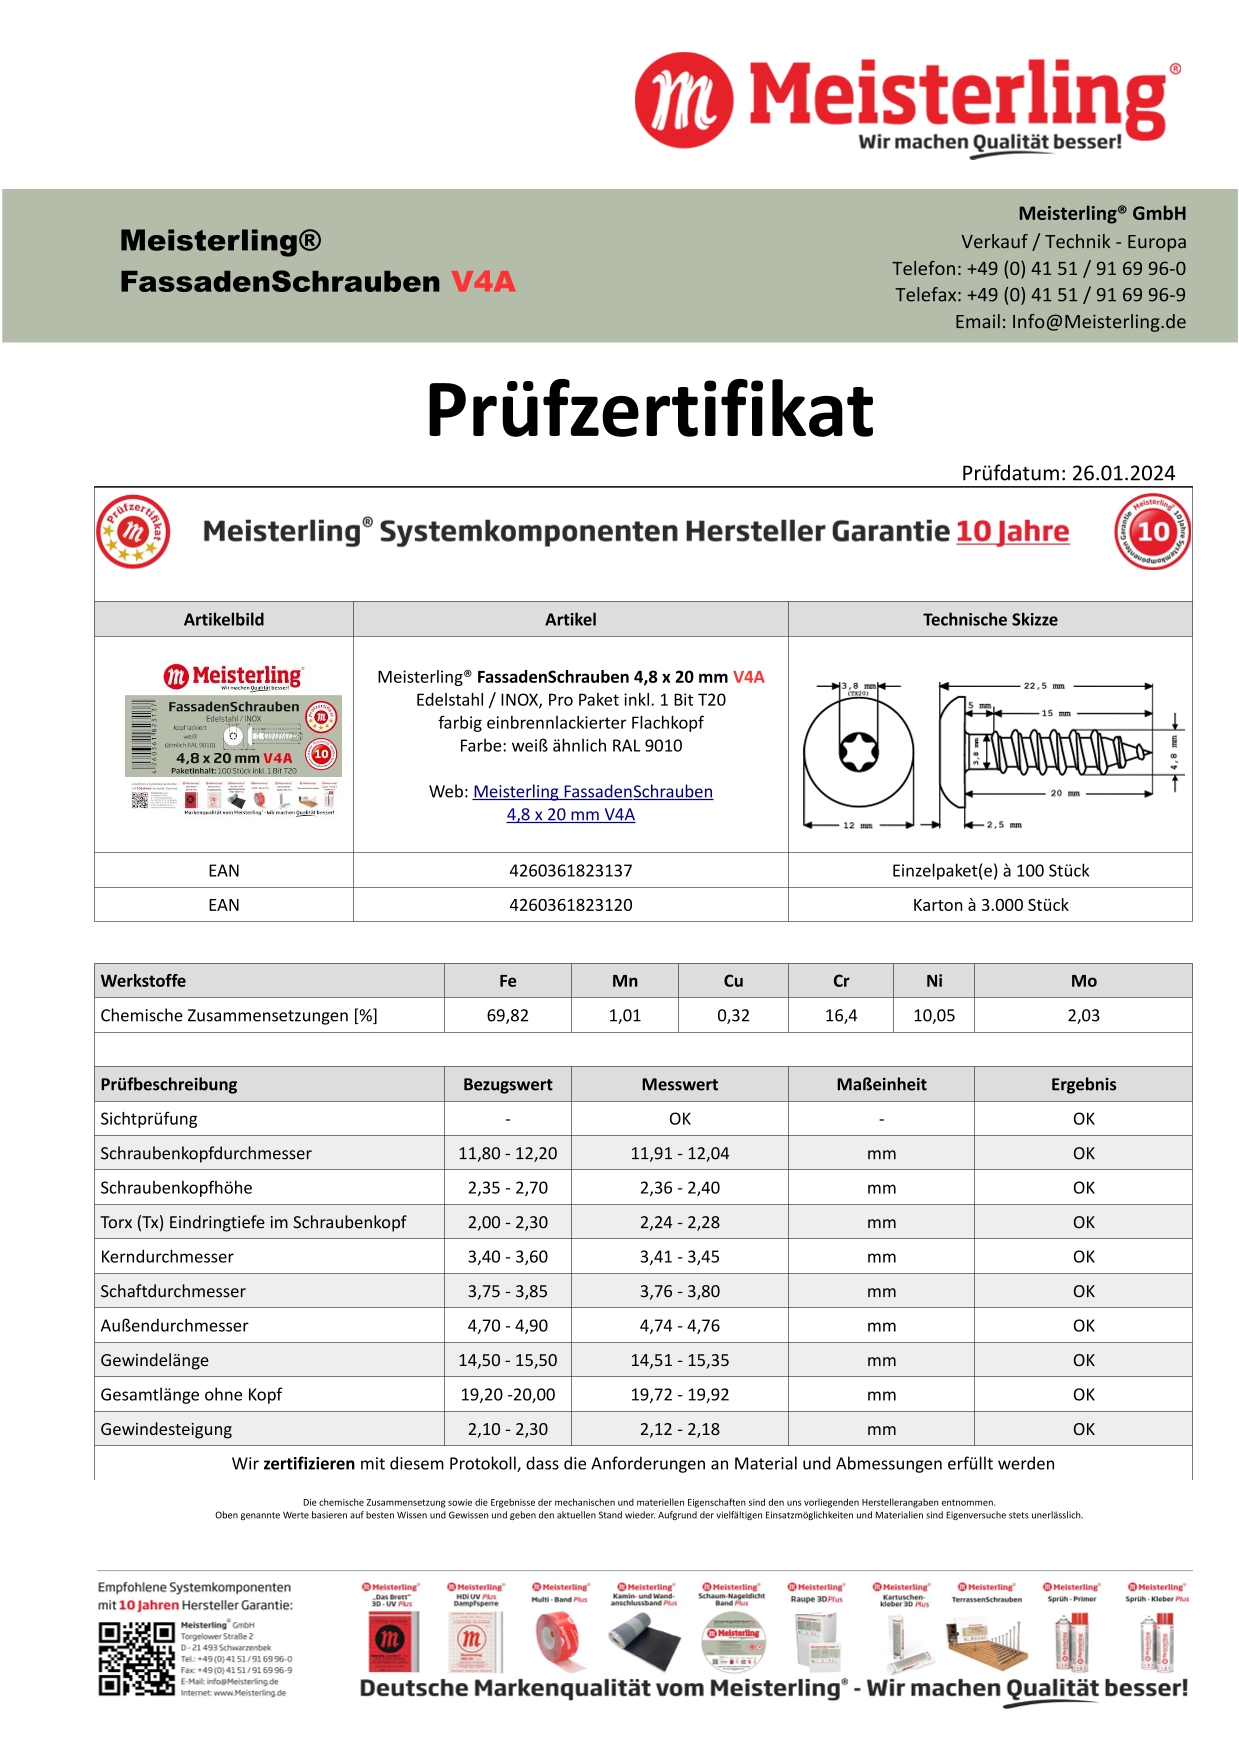 Prüfzertifikat Meisterling® FassadenSchrauben 4,8 x 20 mm V4a weiß